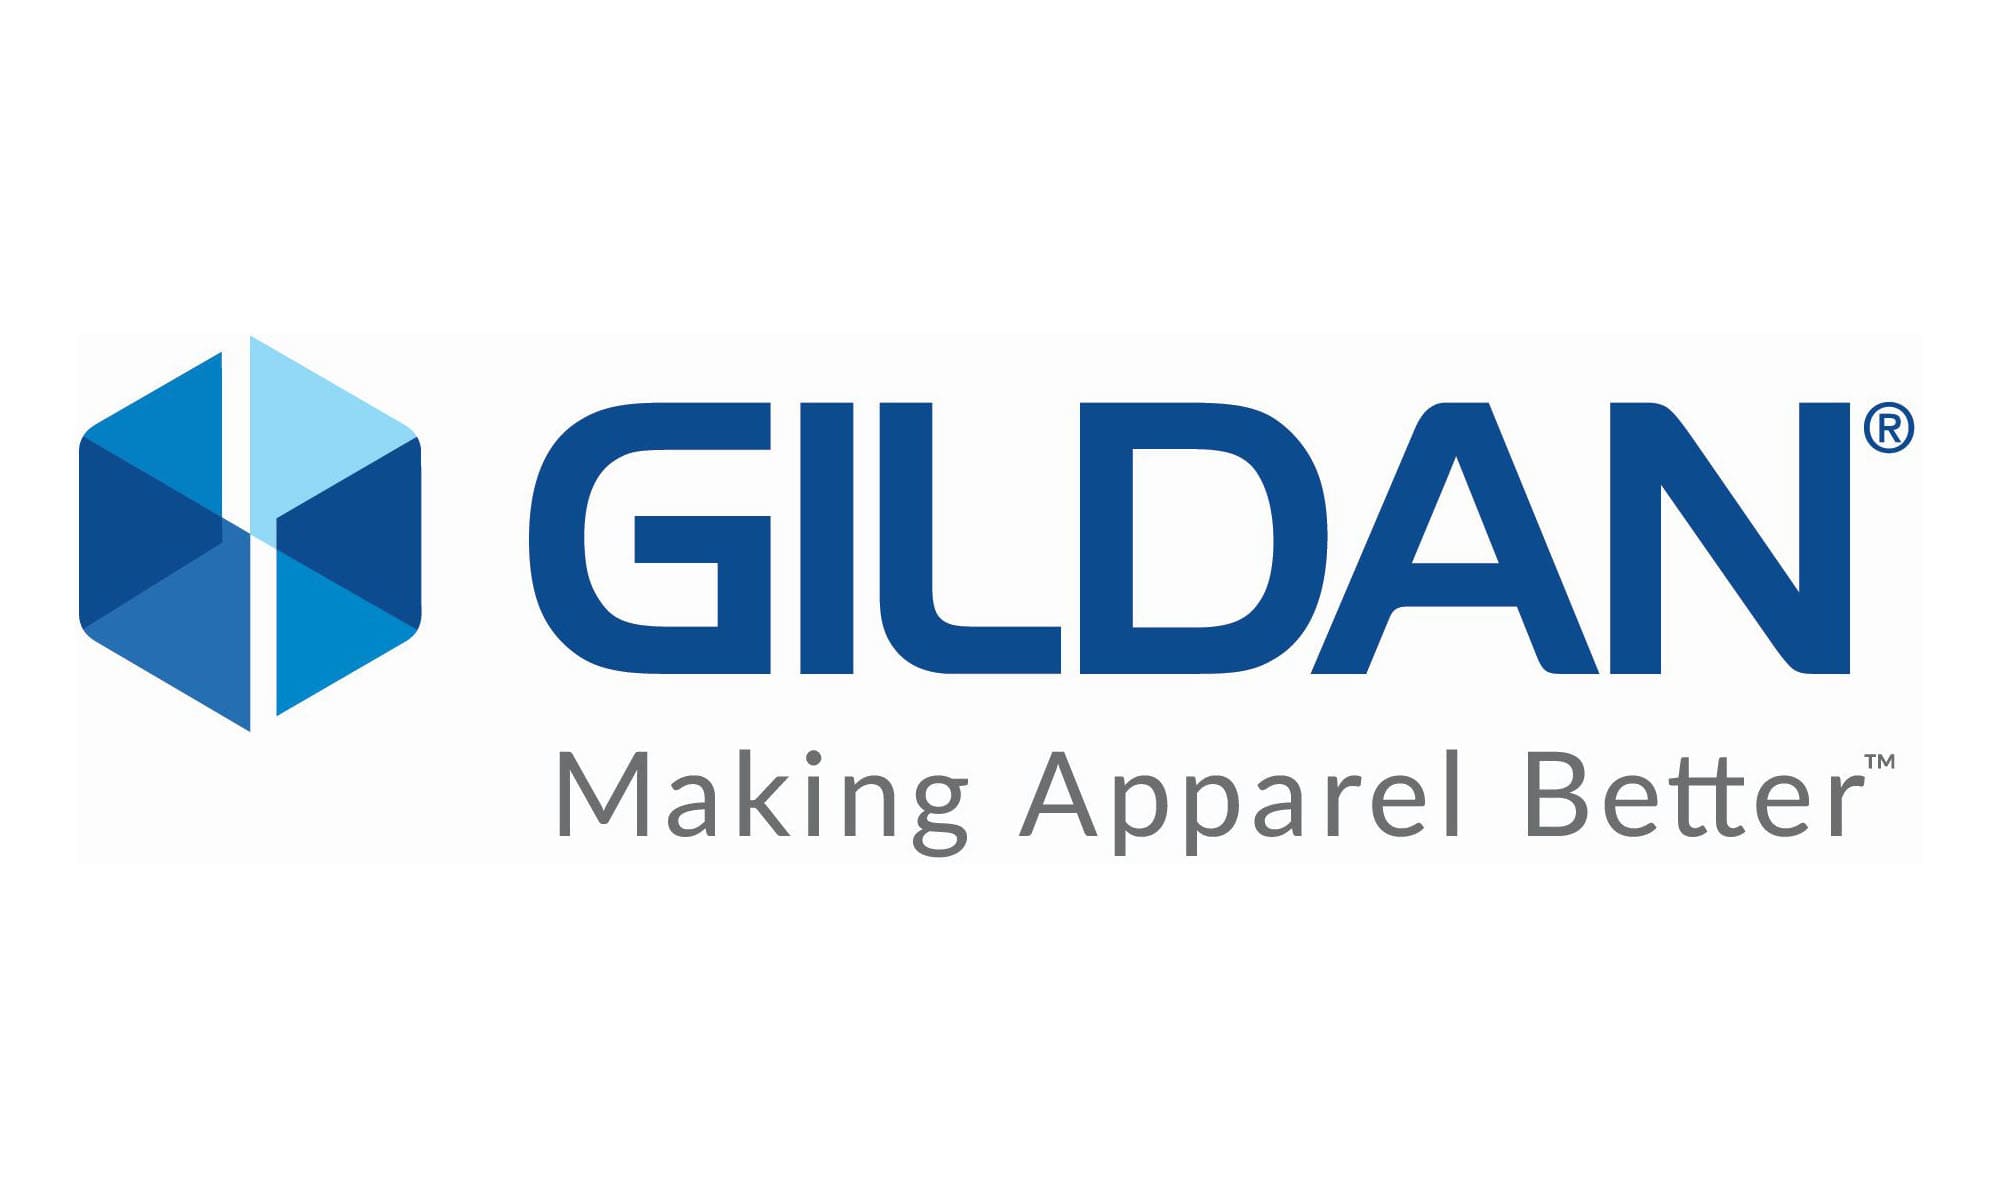 Gildan Activewear